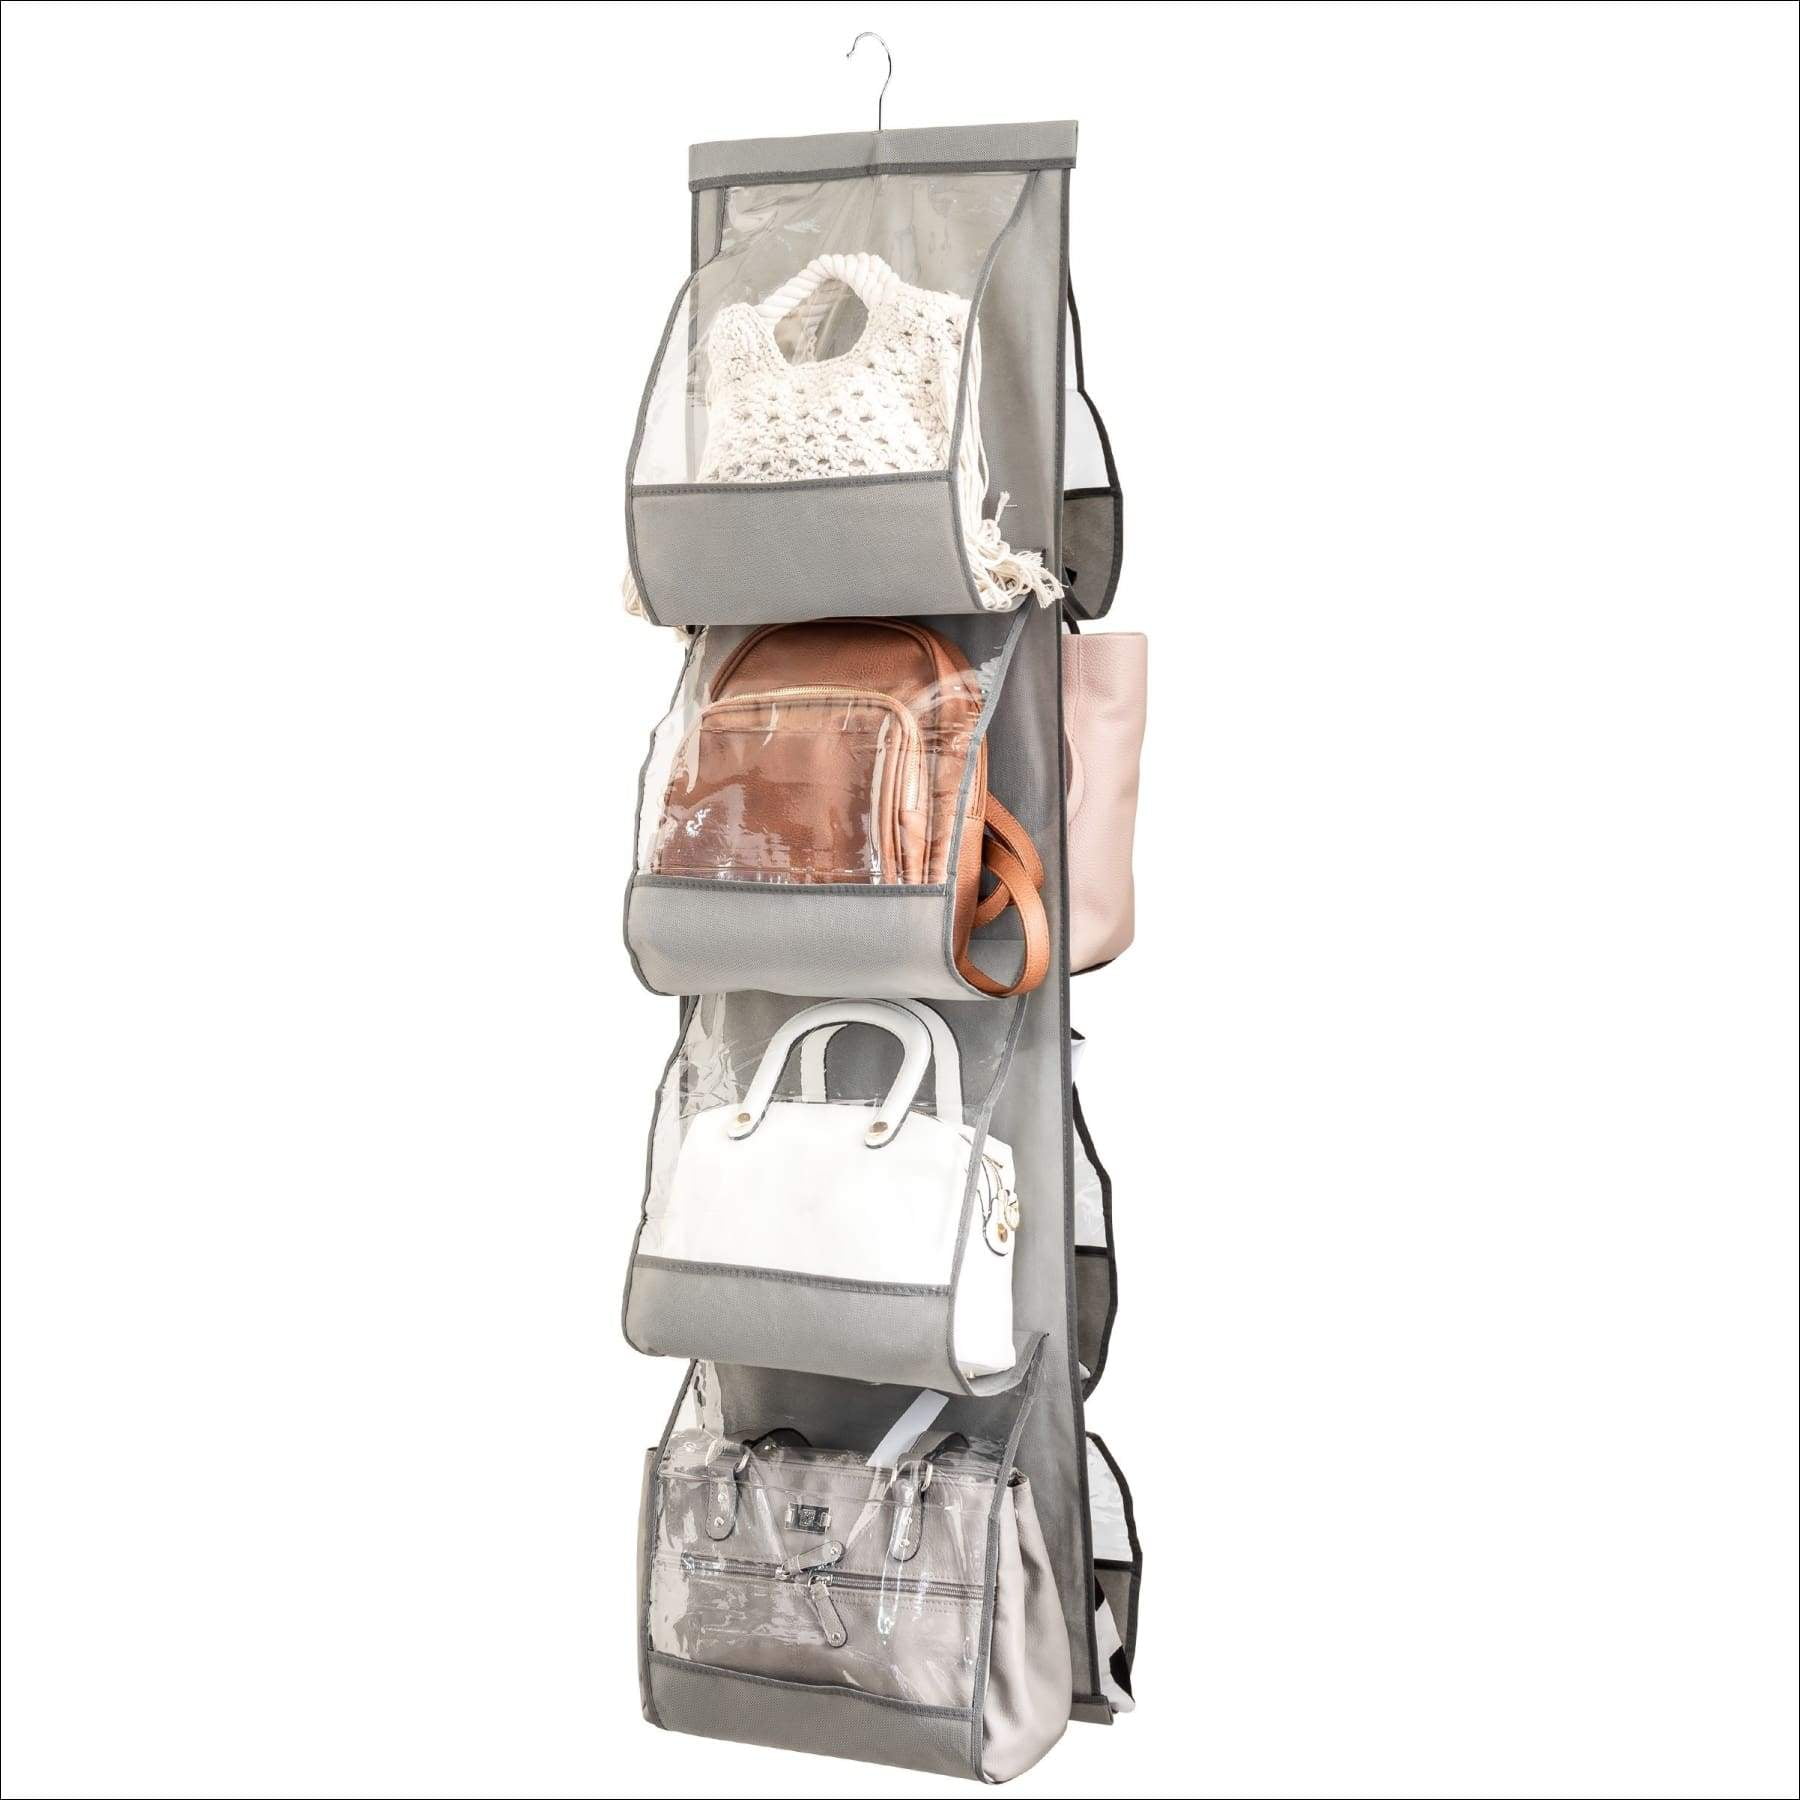 Dengjunhu Handbag Dust Bags Clear Purse Storage Organizer for Closet,  Hanging Zipper Storage Bag for Handbags 